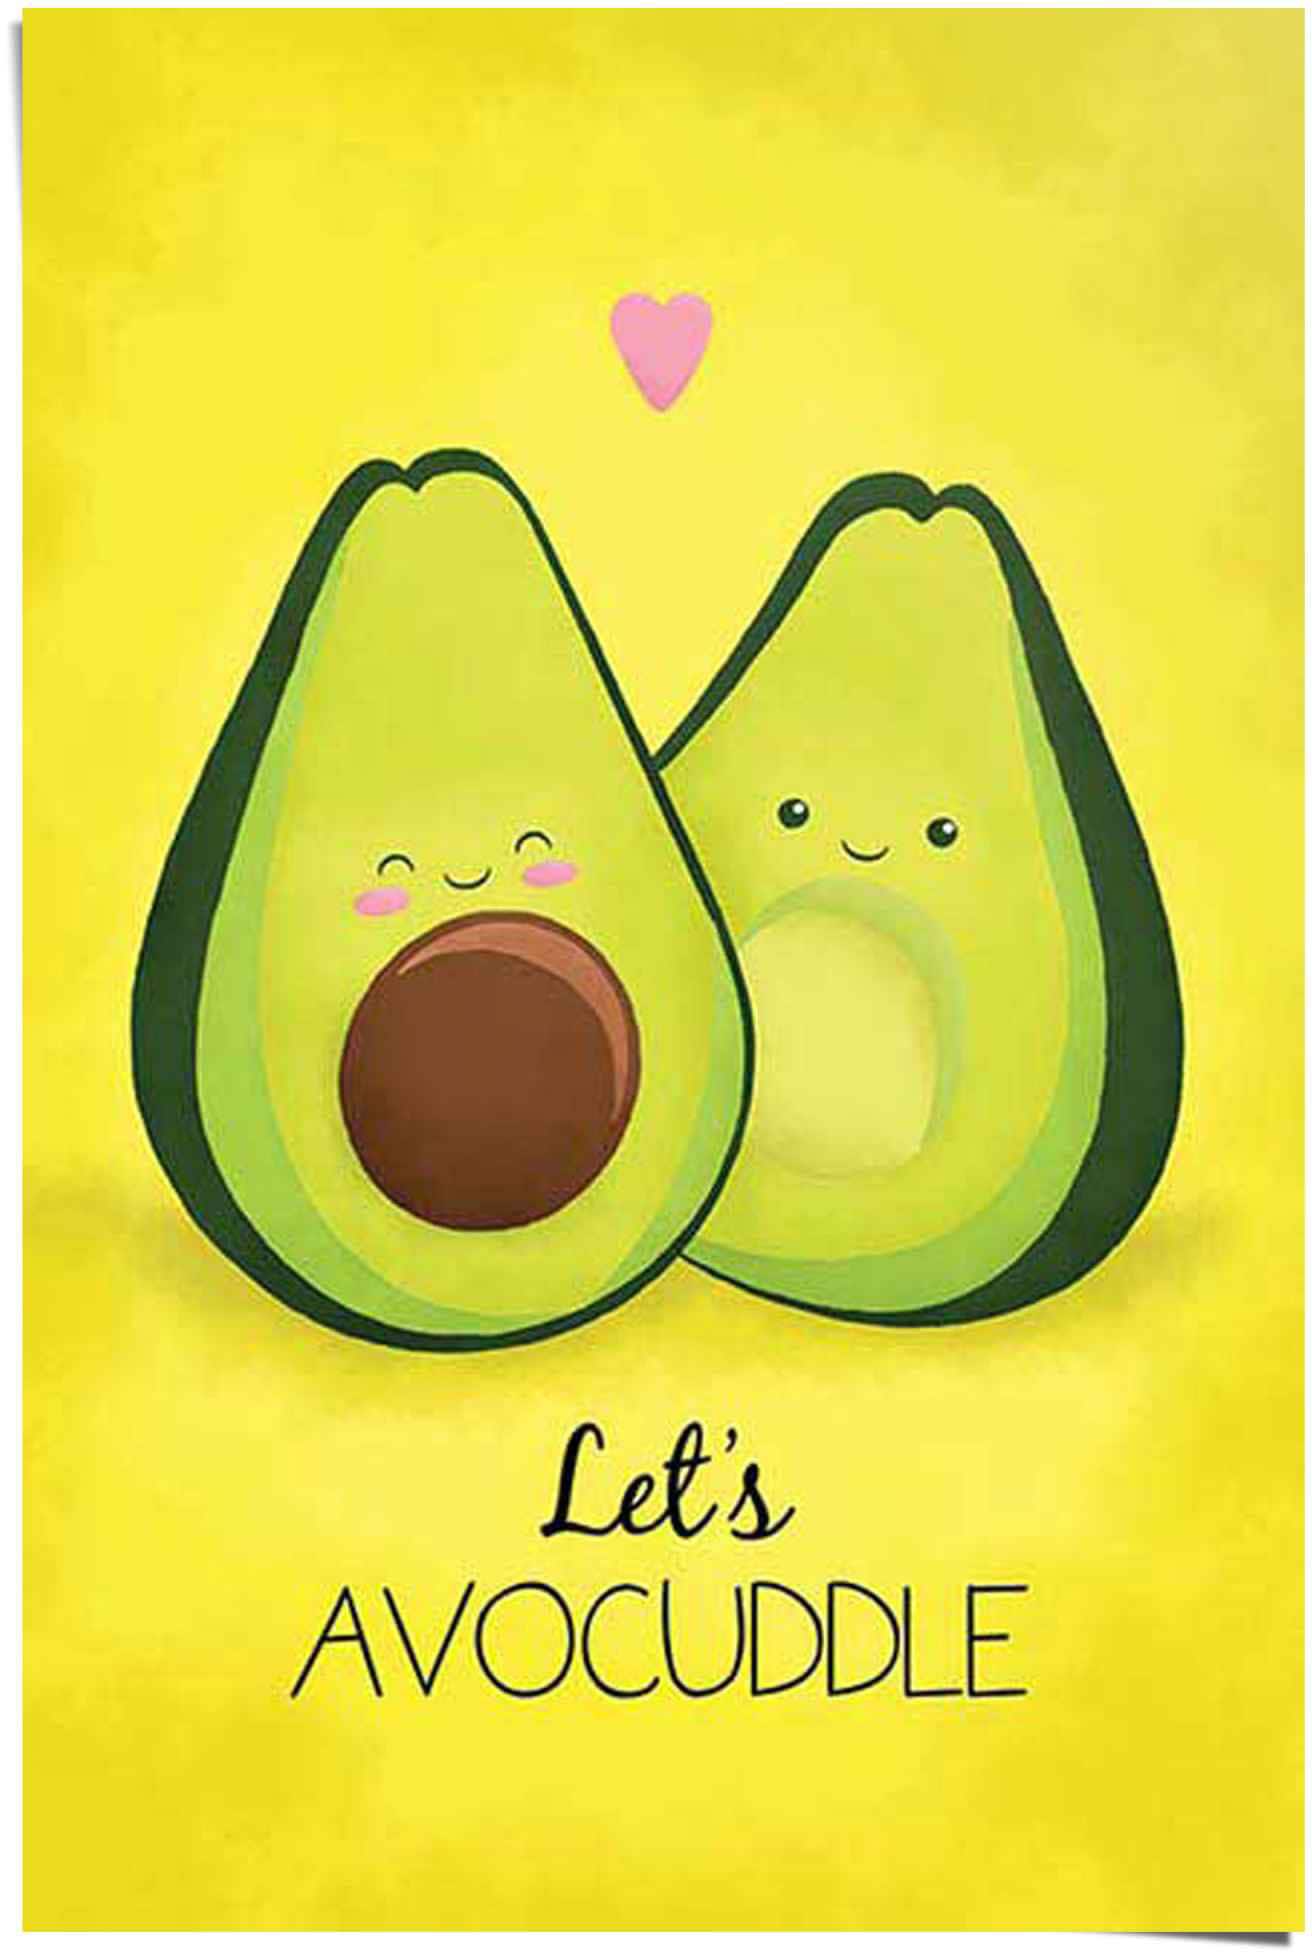 let´s (1 Poster günstig kaufen »Avocado avocuddle«, St.) Reinders!